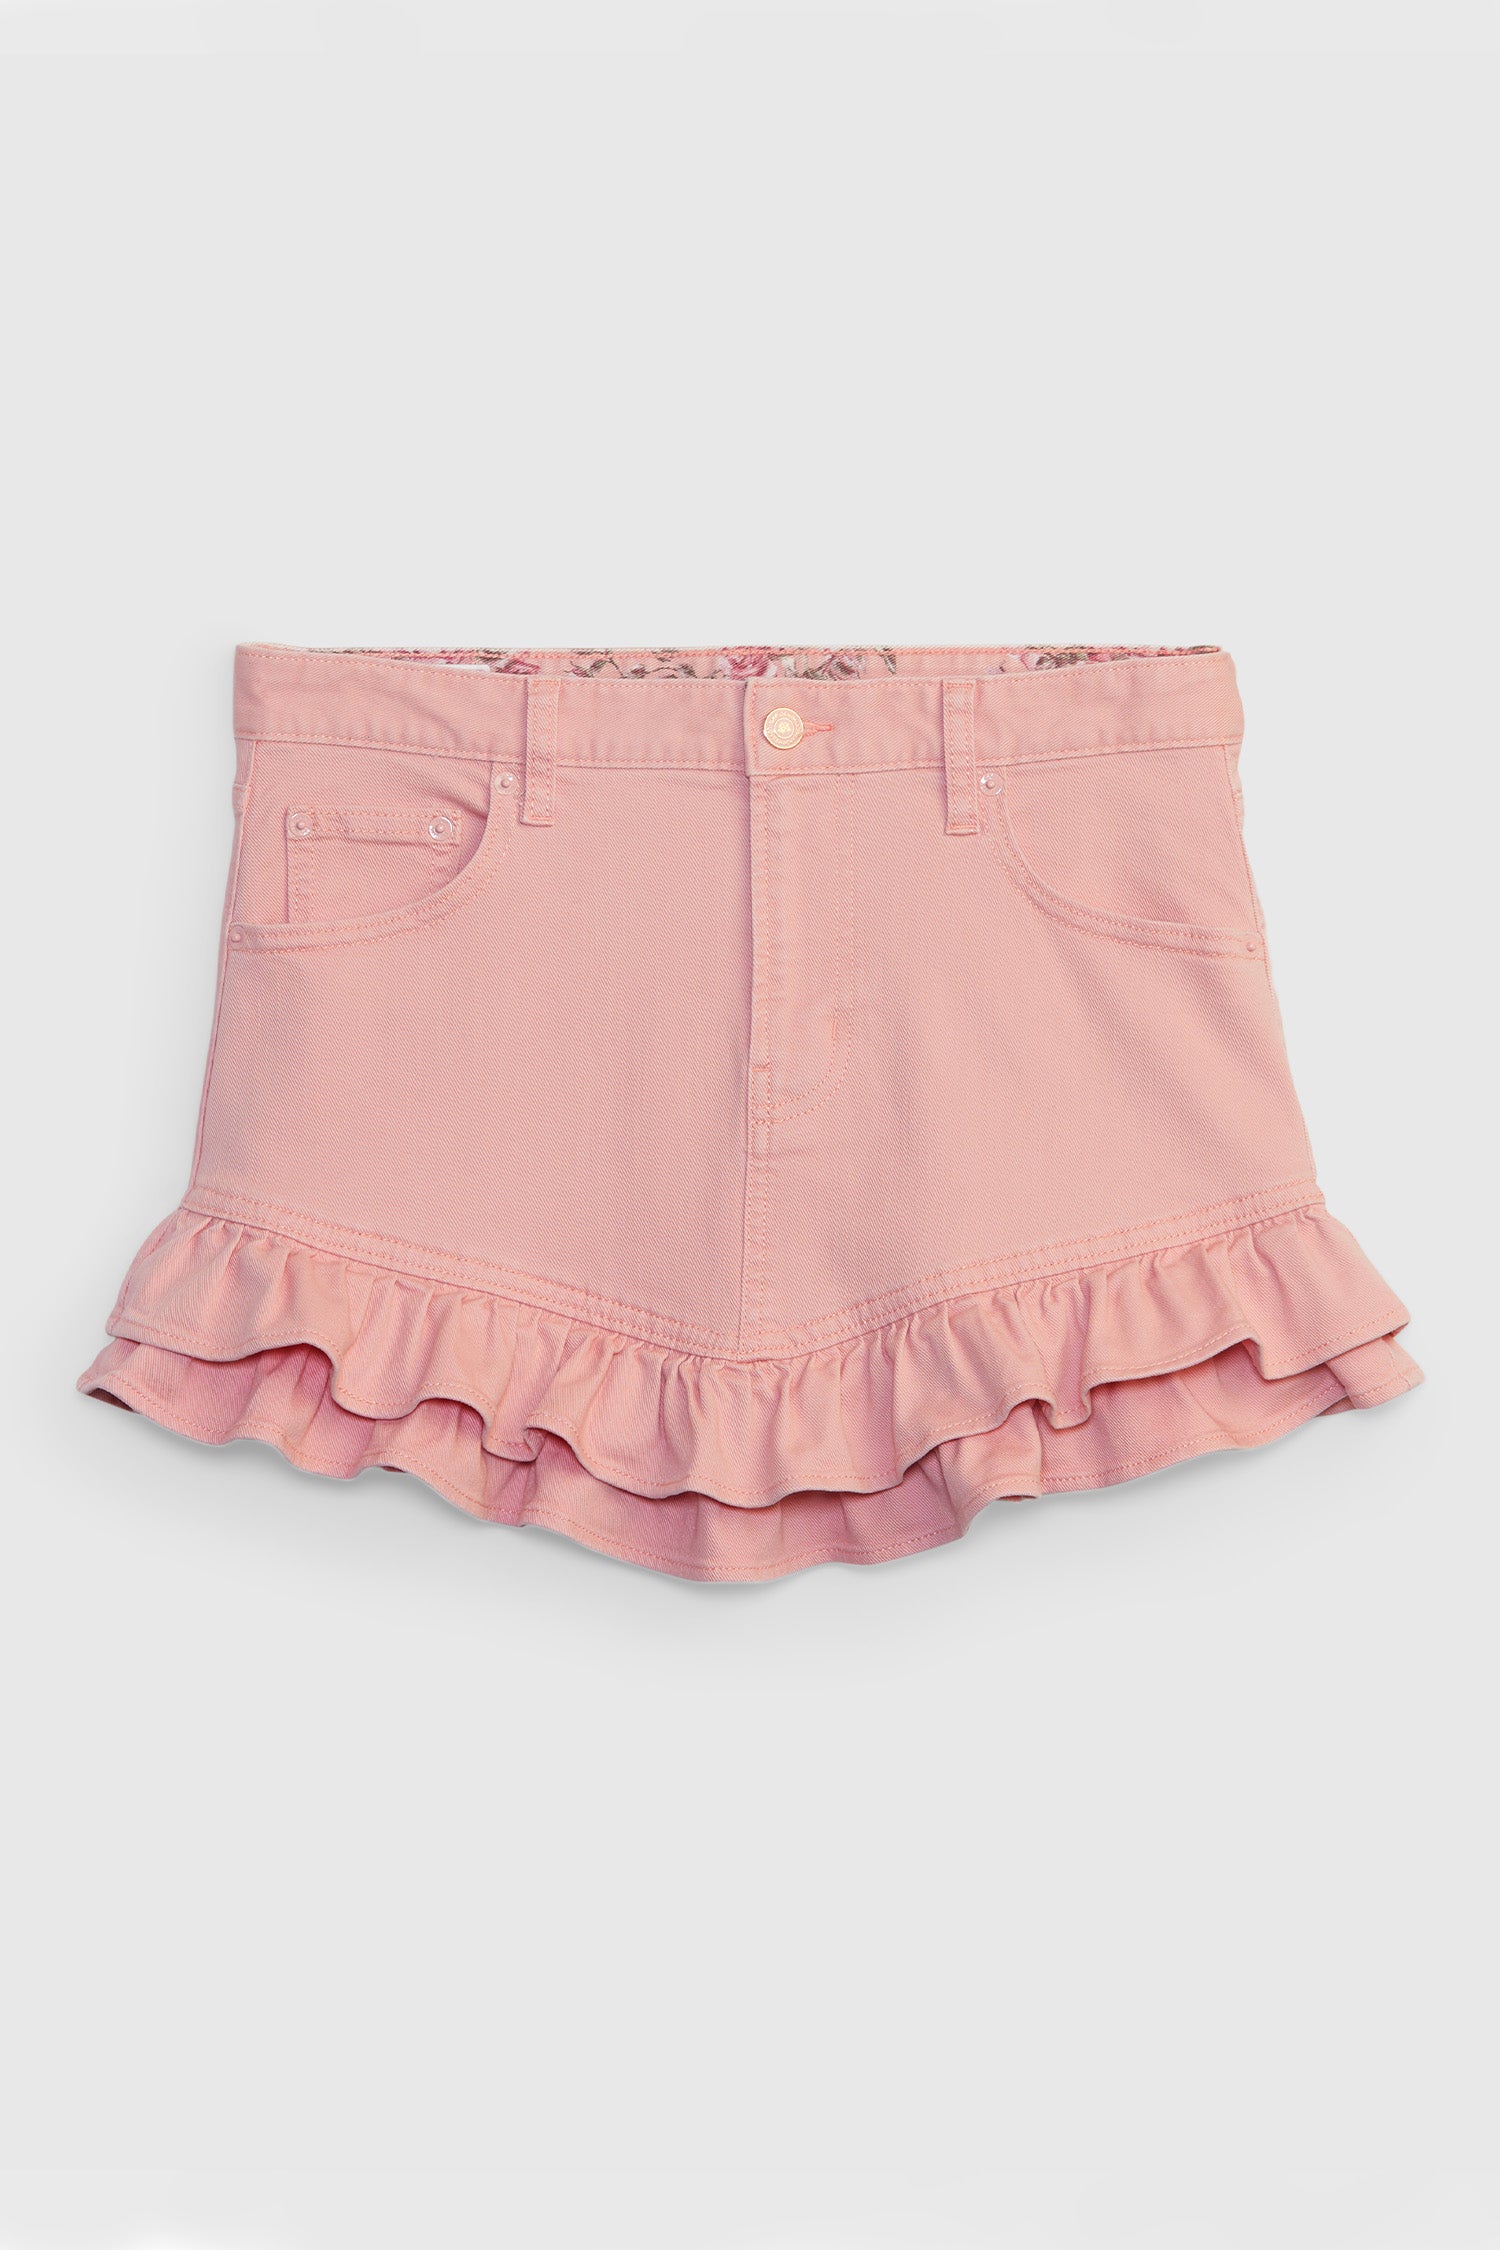 Pink denim mini skirt with ruffle detail at hem